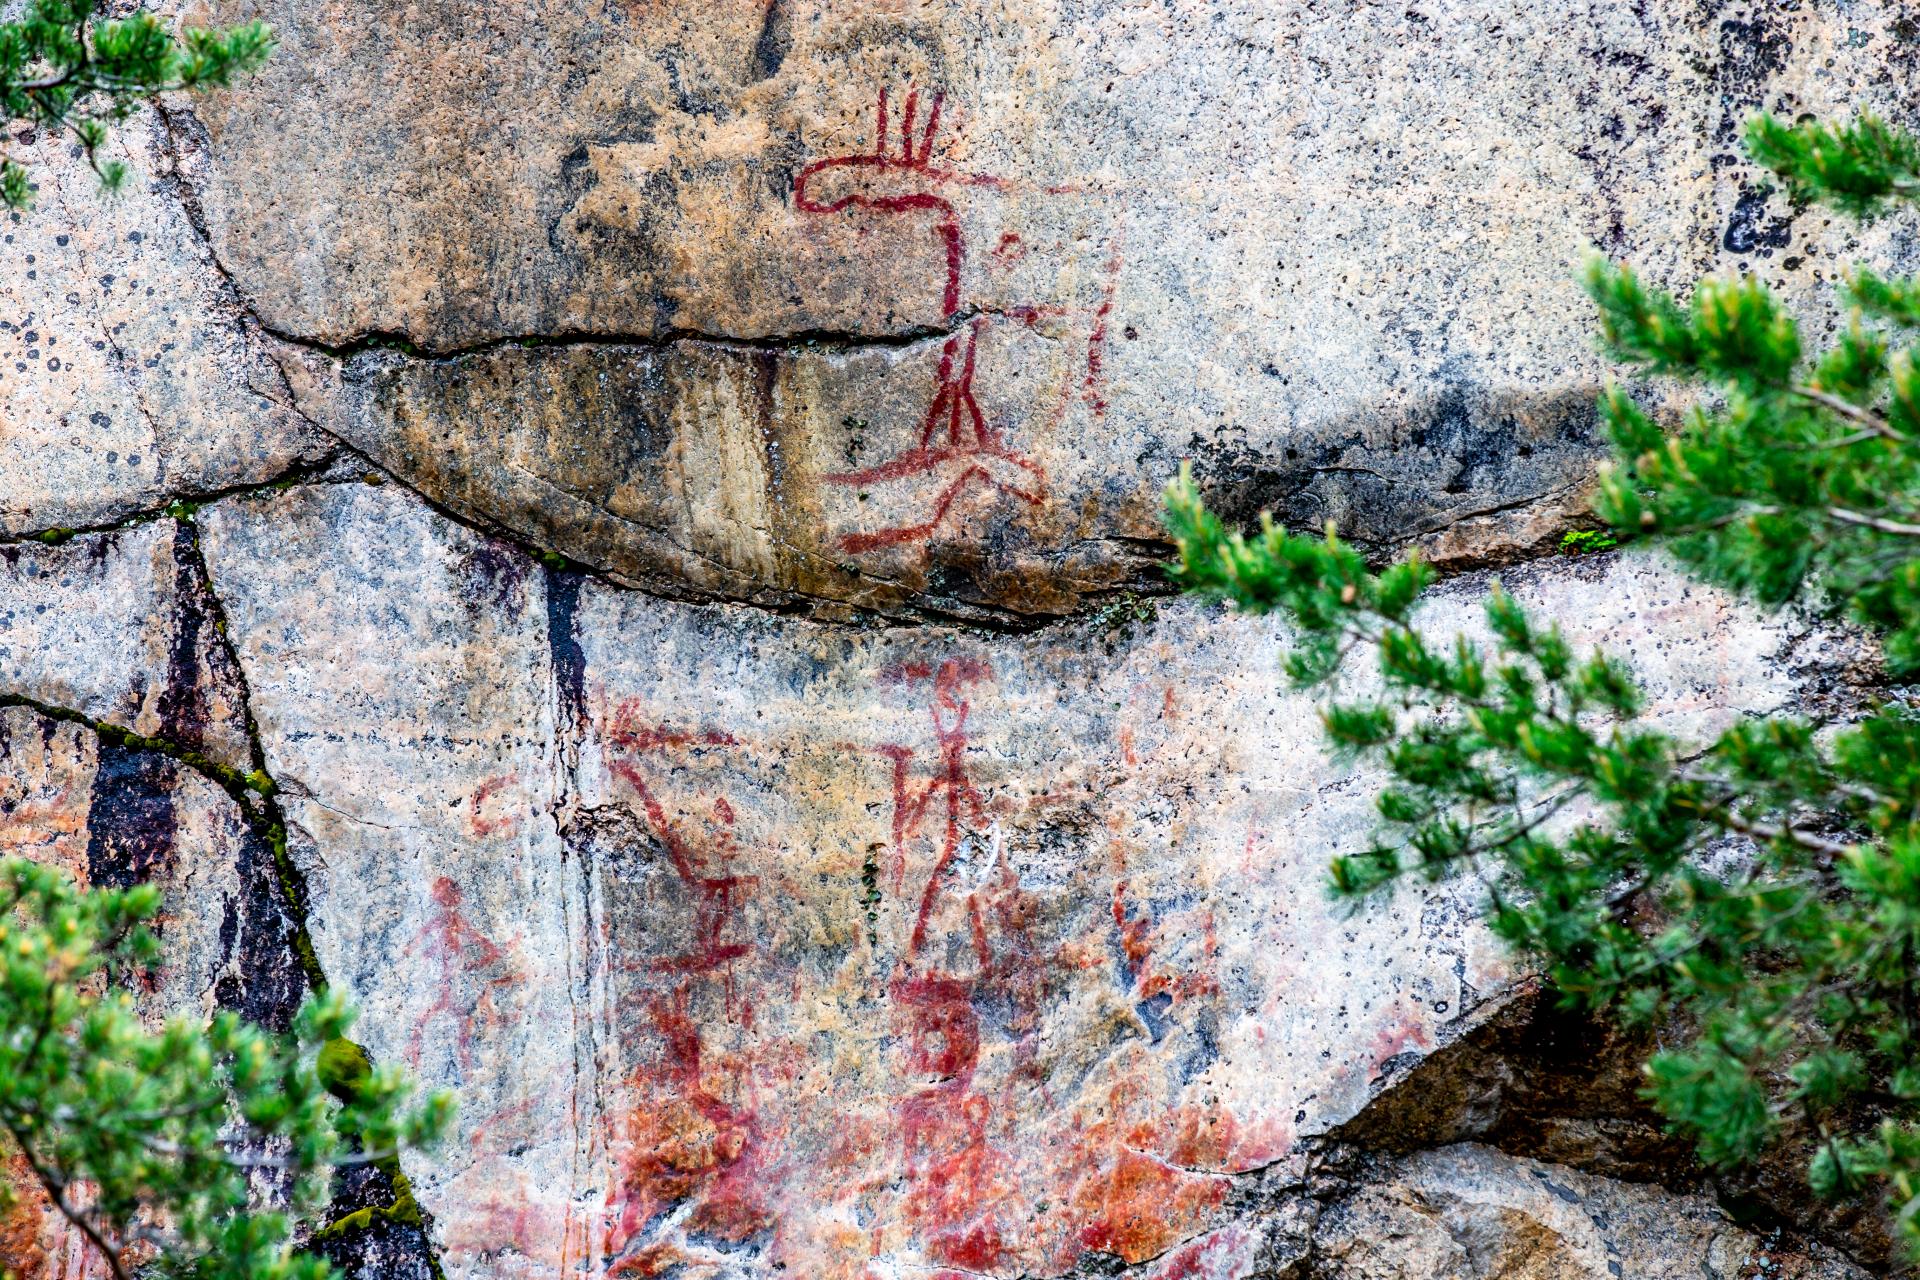 Rock paintings representing moose and humans. 